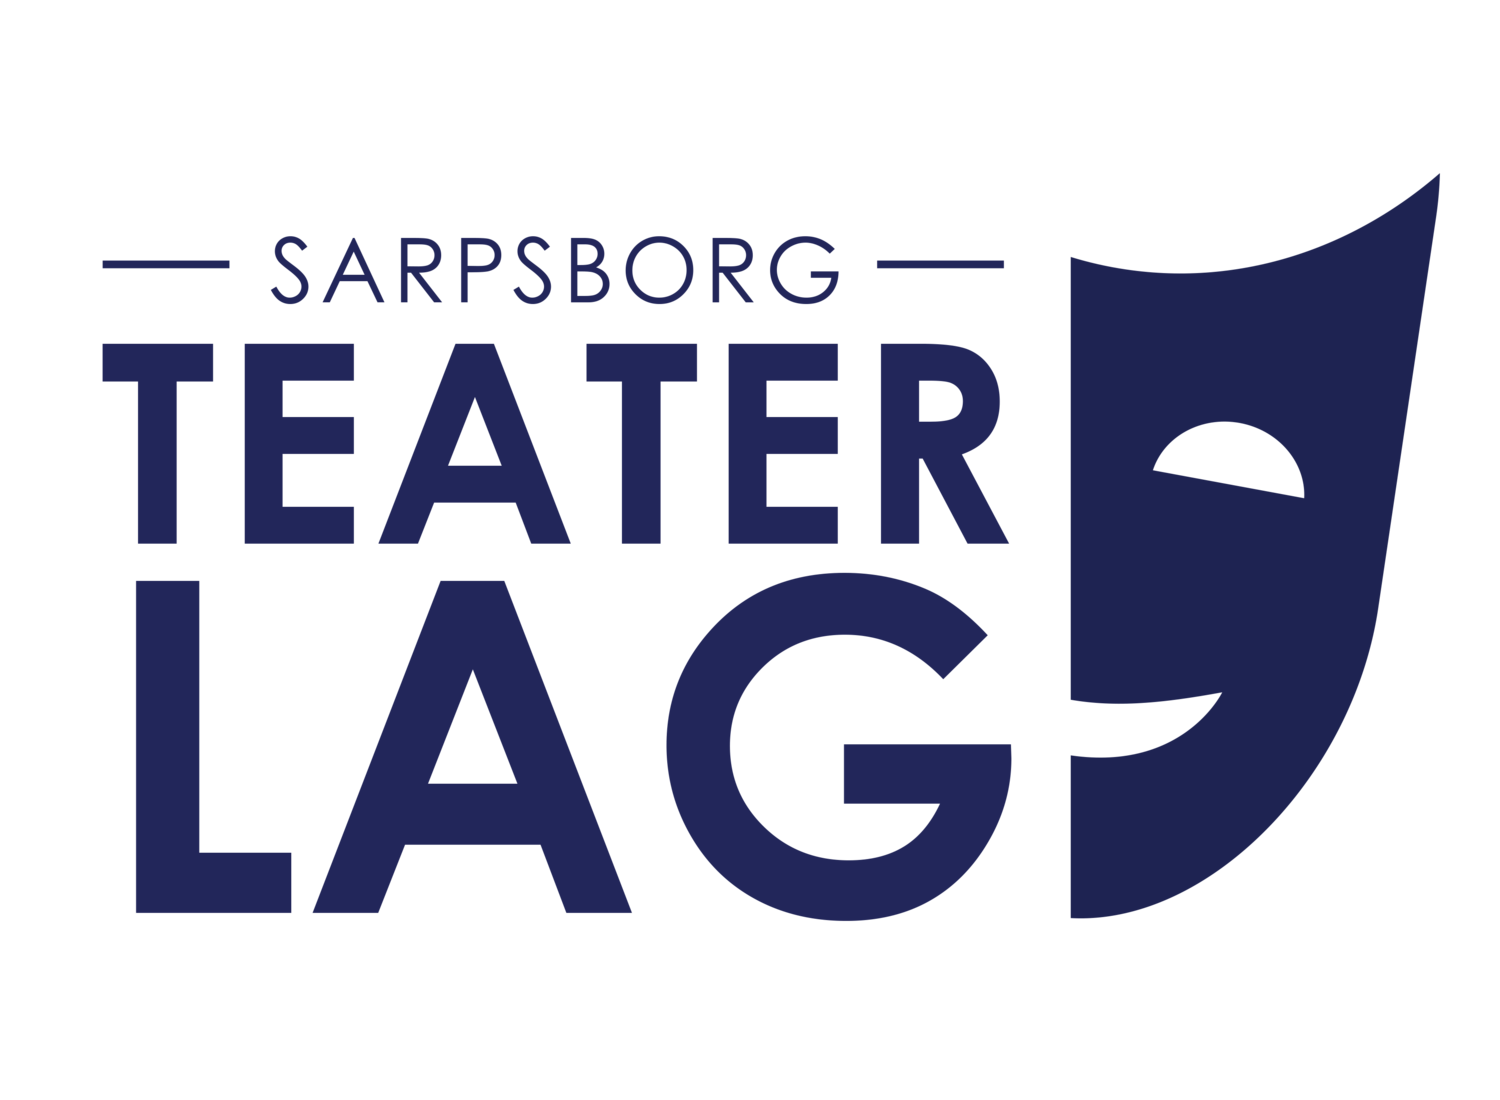 Sarpsborg teaterlag